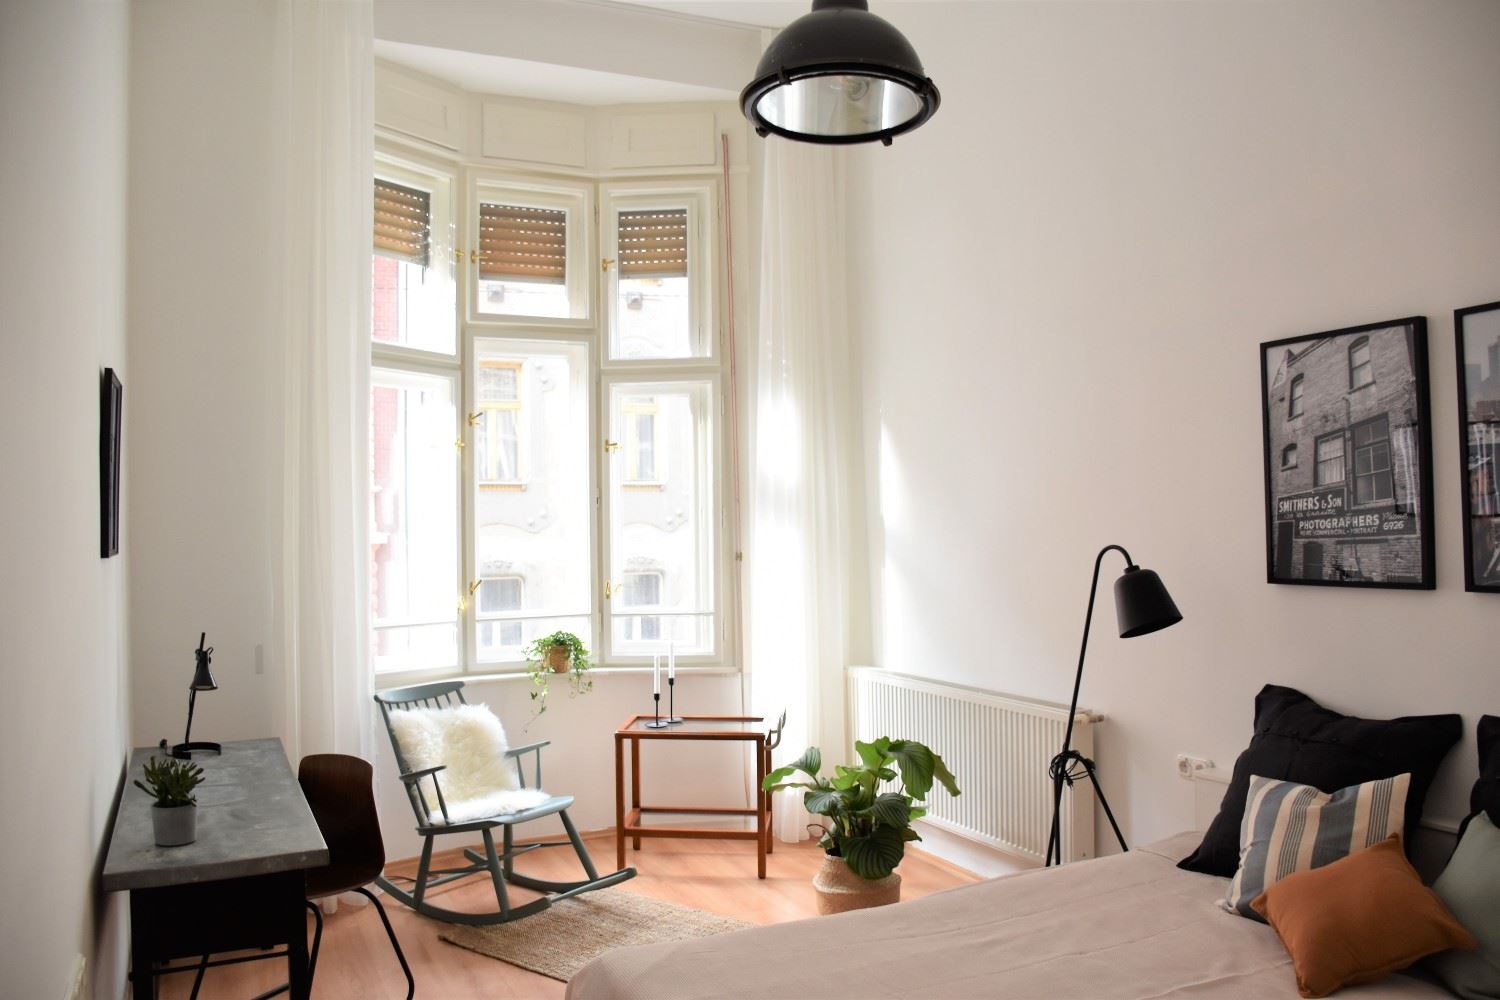 budapestrent-brand-new-big-3-bedroom-apartment-for-rent-near-sze-4